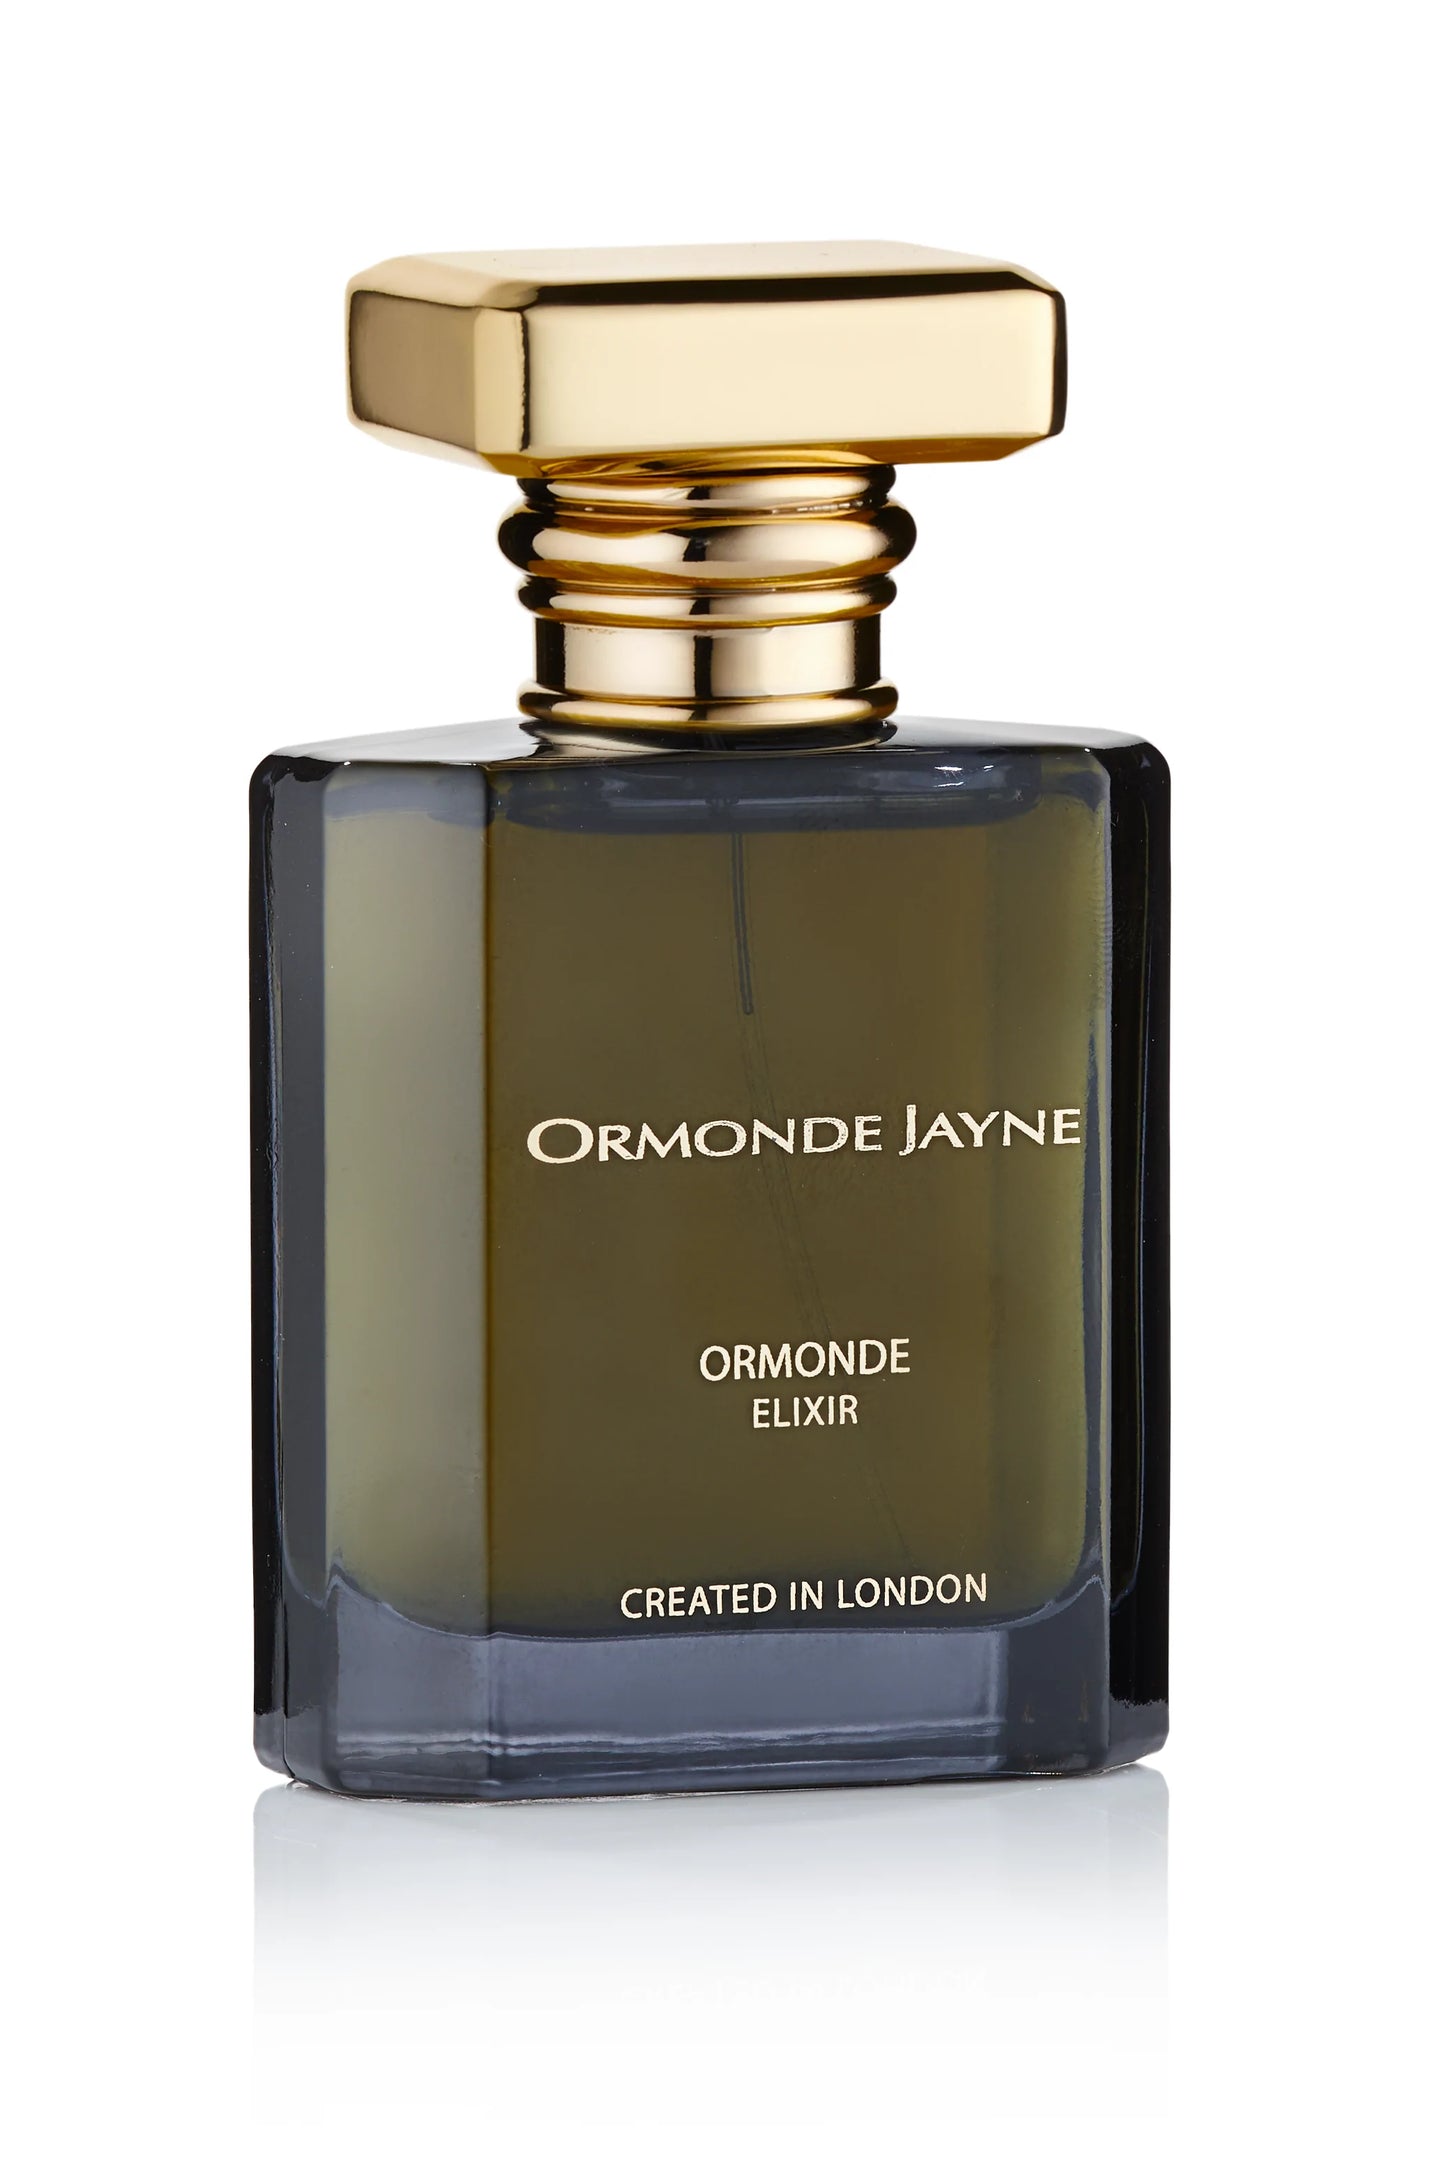 Ormonde Jayne Élixir Ormonde 2 ml 0.06 fl. oz échantillon de parfum officiel